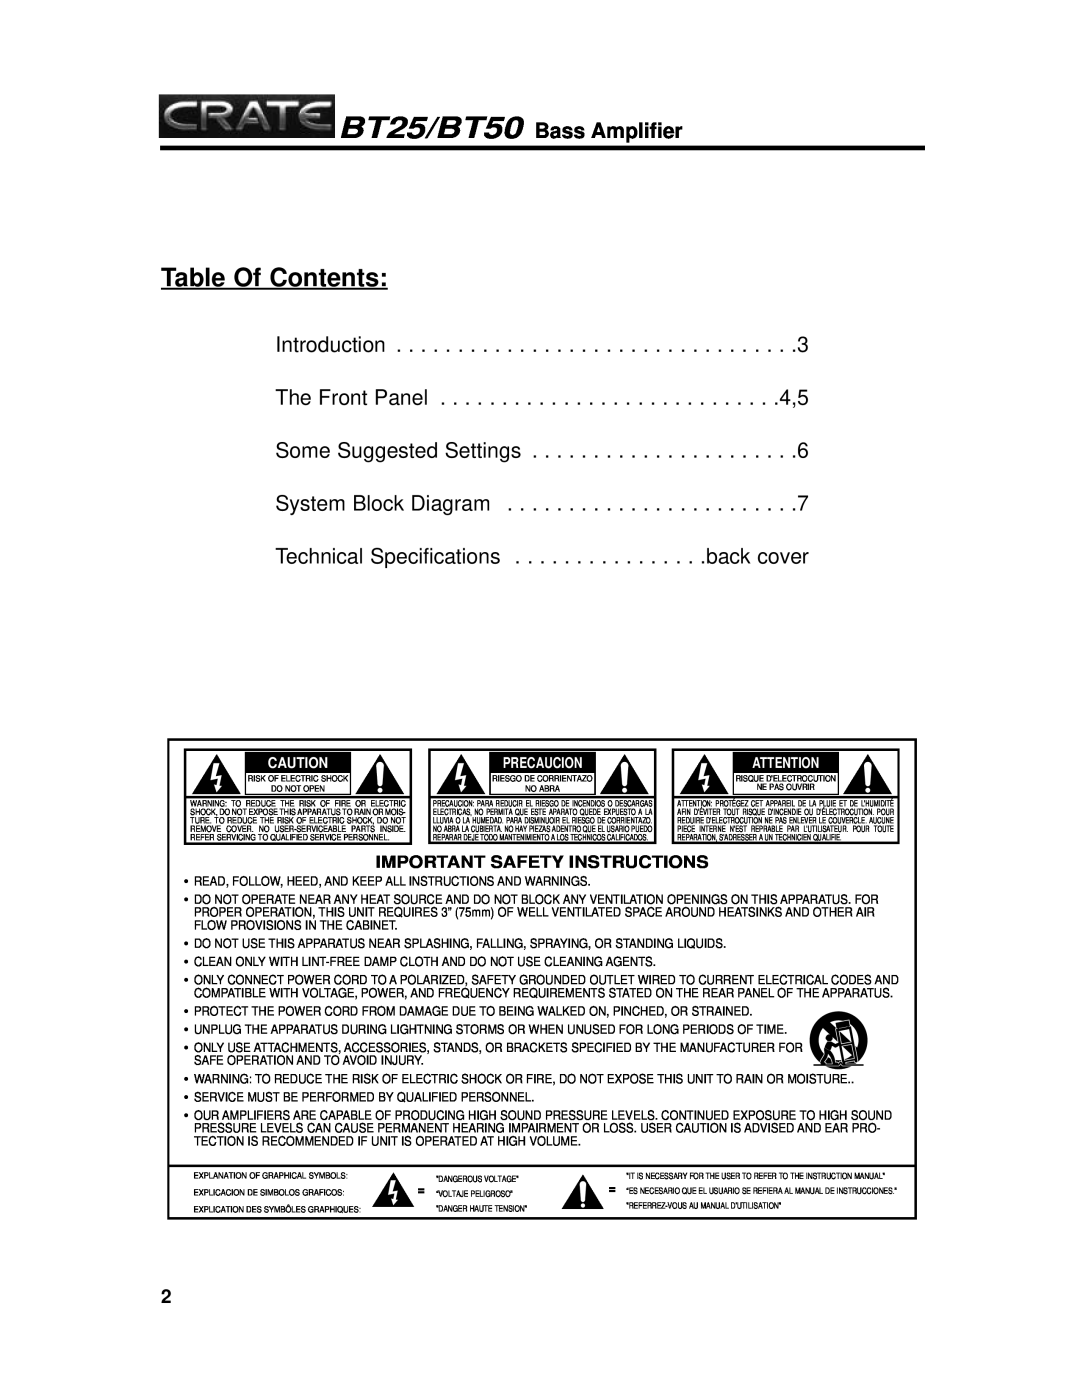 Crate Amplifiers bt25/bt50 manual Table Of Contents, BT25/BT50 Bass Amplifier, Important Safety Instructions, Precaucion 